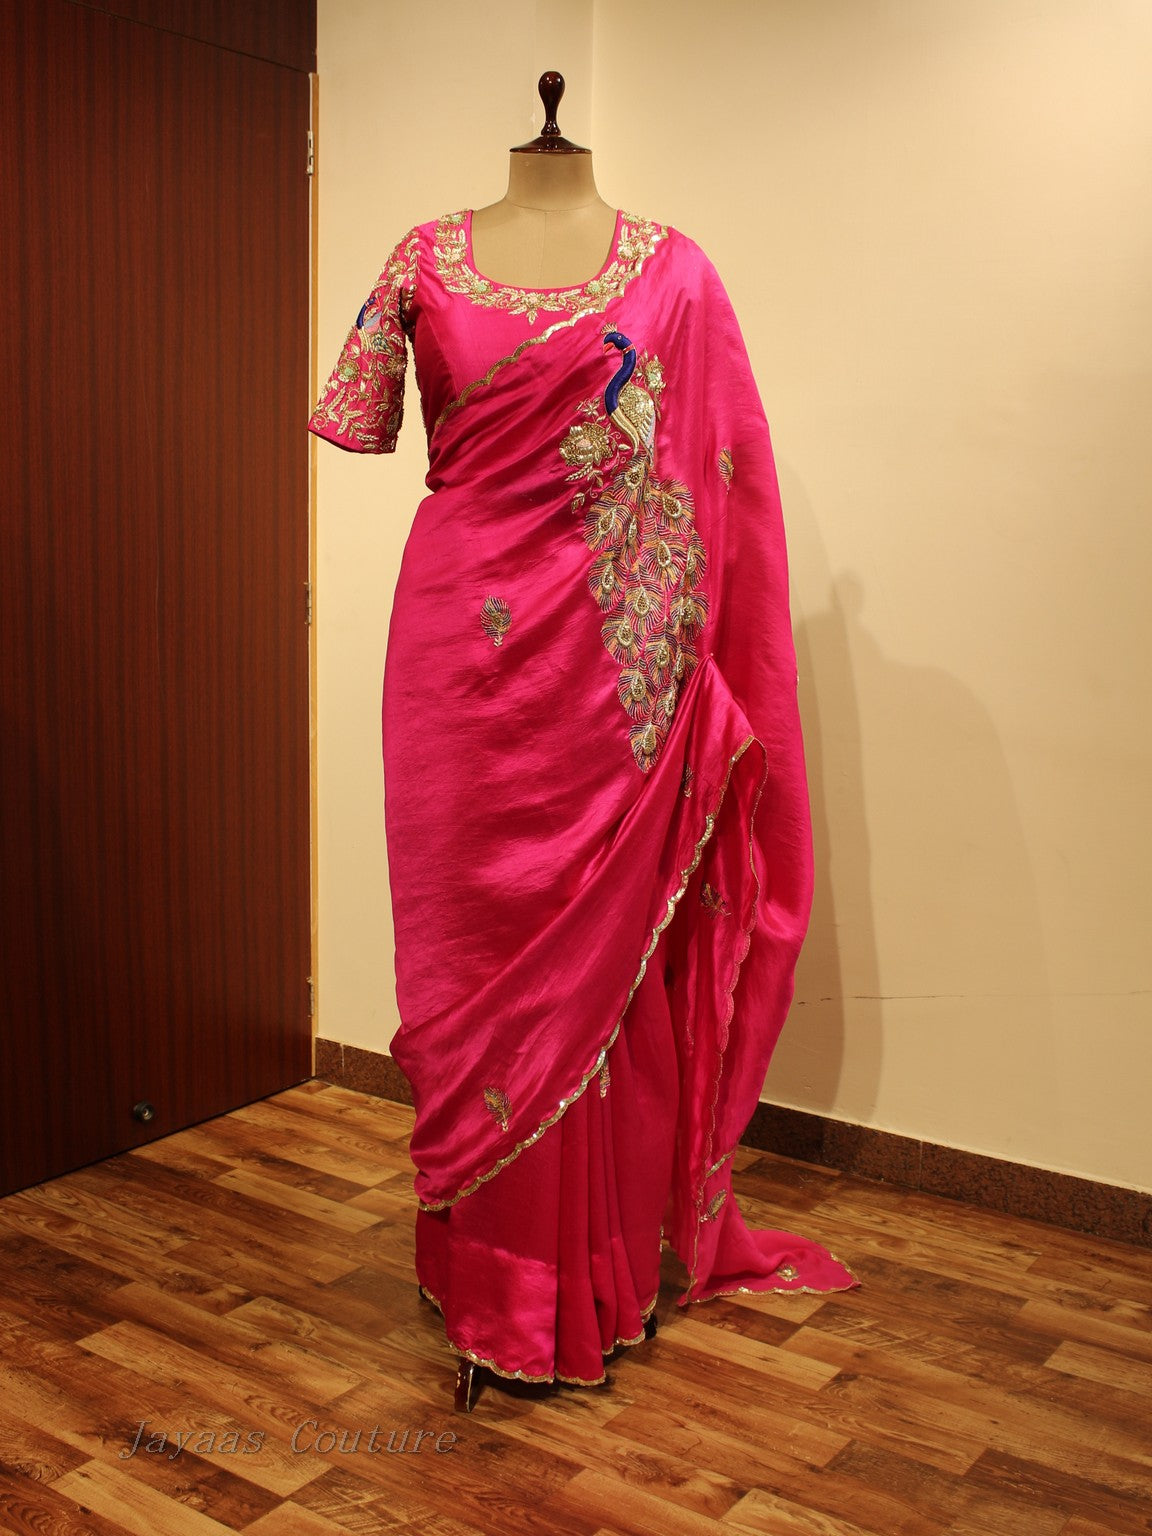 Rani peacock saree with blouse